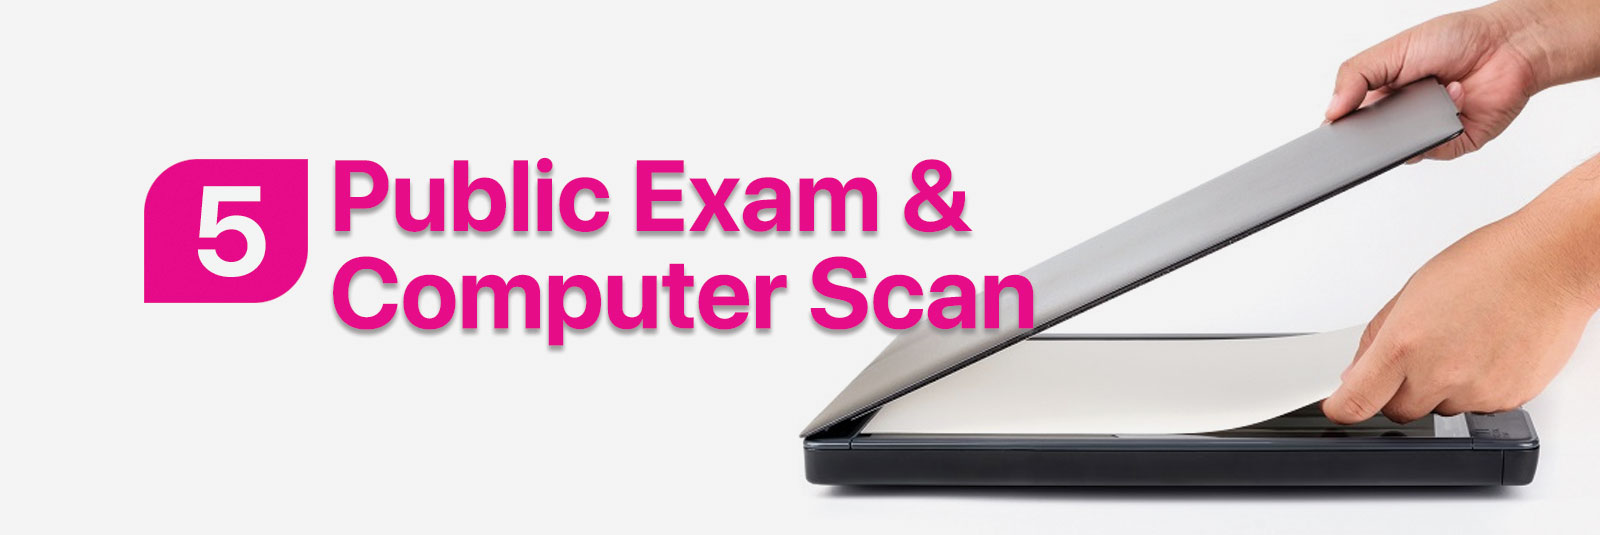 Public Exam & Computer Scan